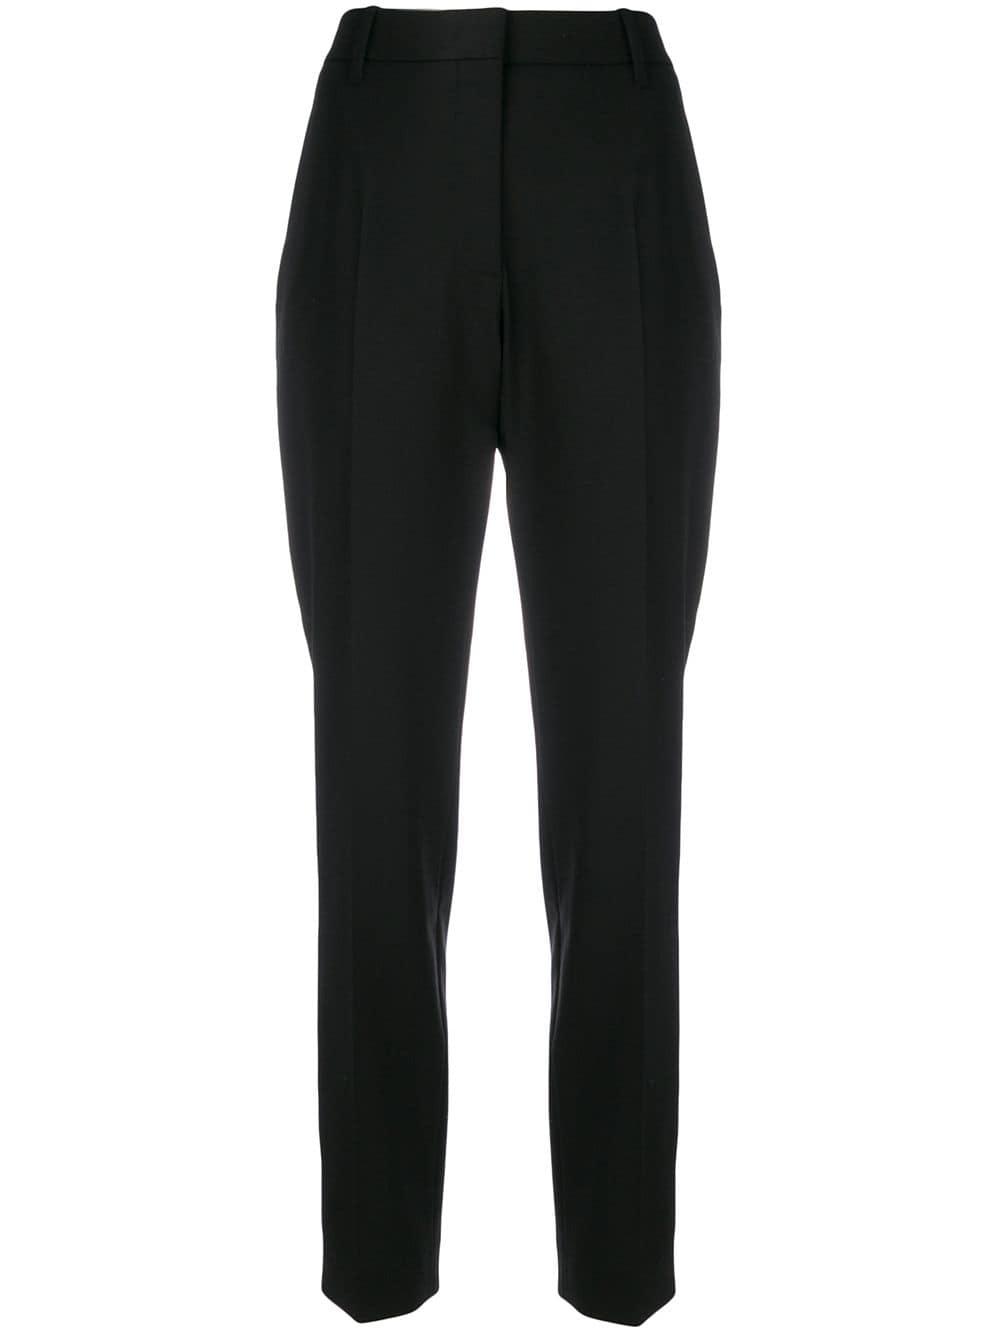 CALVIN KLEIN 205W39NYC Wool Side Stripe Tapered Trousers in Black - Lyst